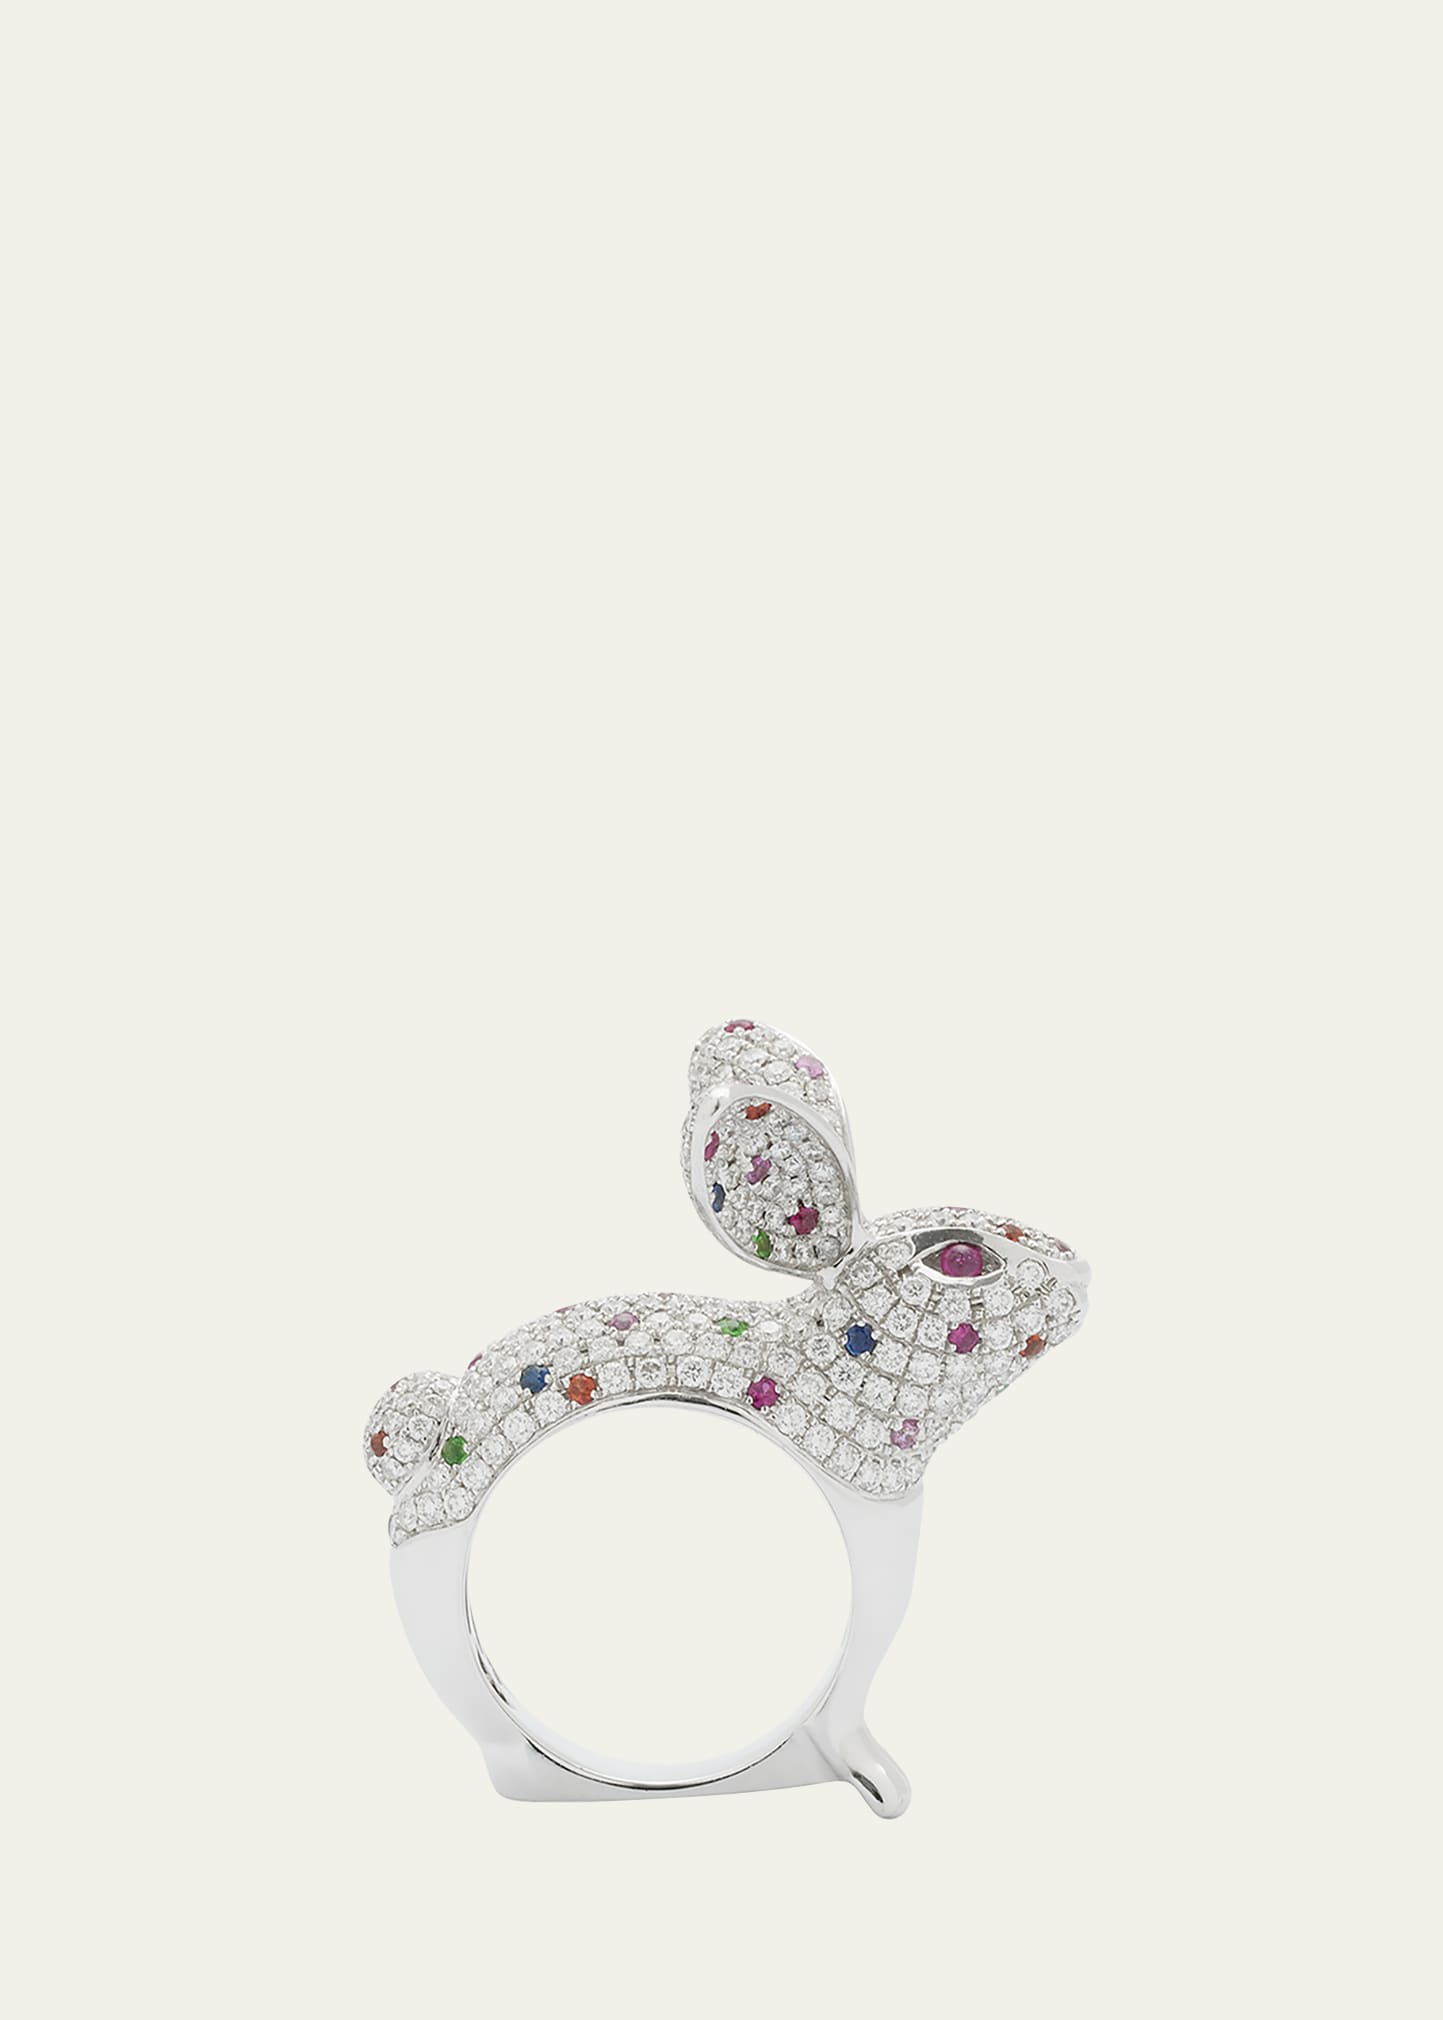 Mio Harutaka 18k White Gold Bunny Ring With Diamonds, Sapphires, Garnets, And Rubies